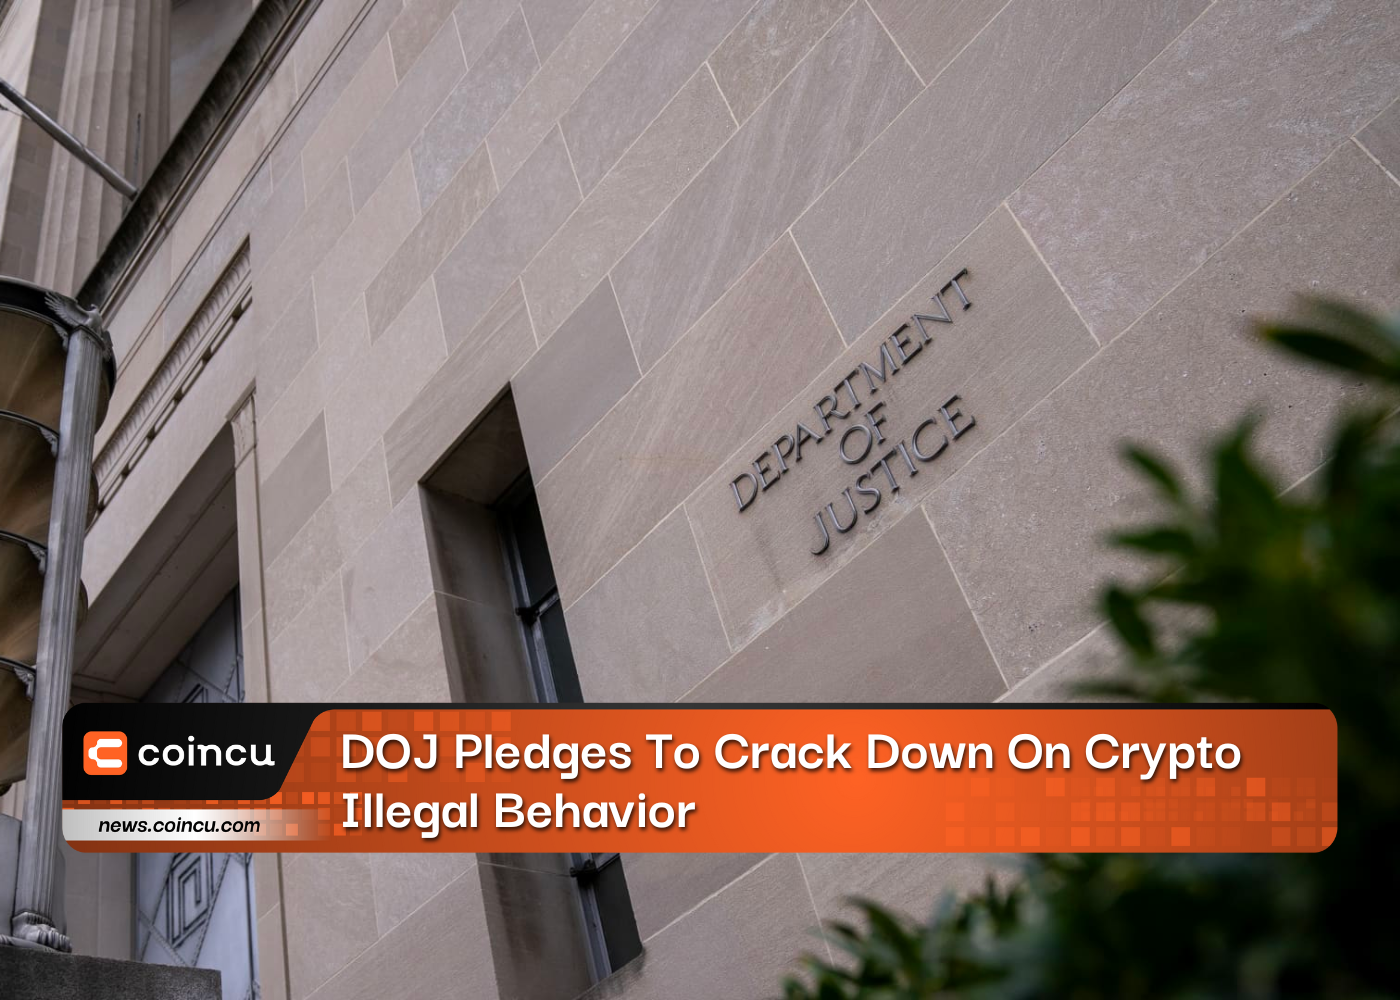 DOJ Pledges To Crack Down On Crypto Illegal Behavior